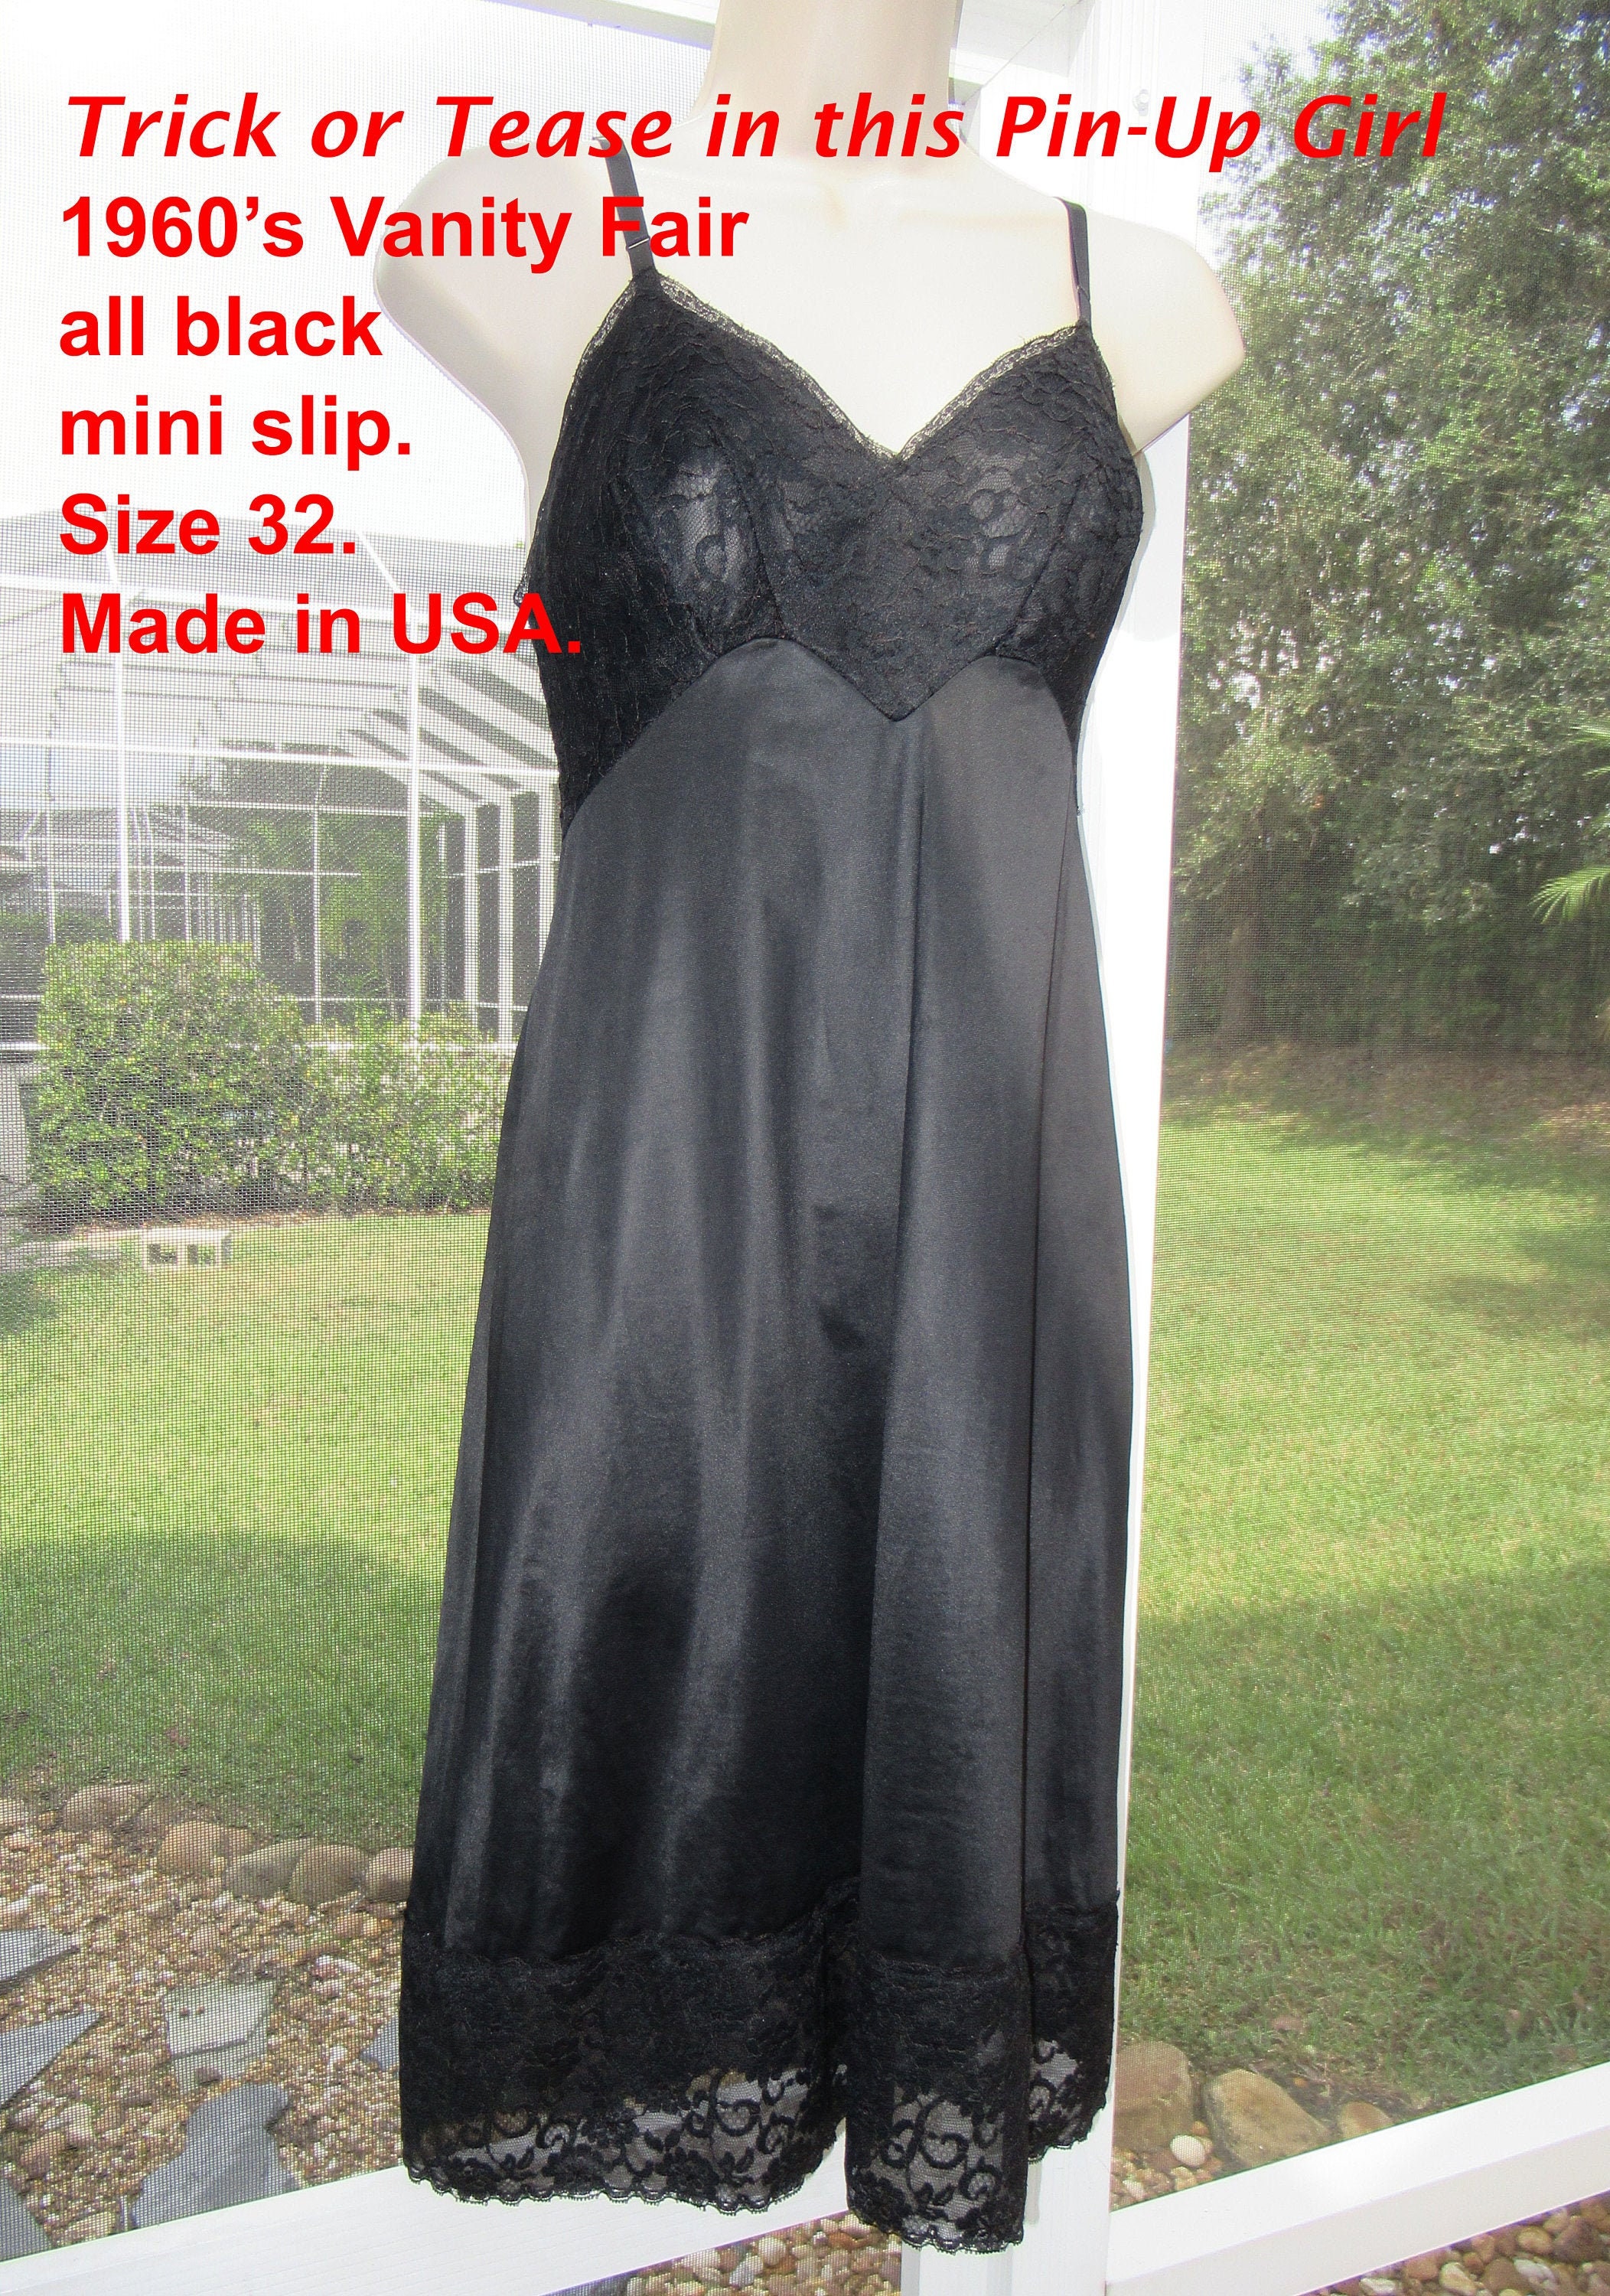 Vanity Fair Sz 32 Slip, Short Black Nylon Pin-up Girl Shaped Lace Bodice, 5  Inch Lace Hem, Made in USA, Vintage 60's Mini, Adjustable Straps -   Ireland